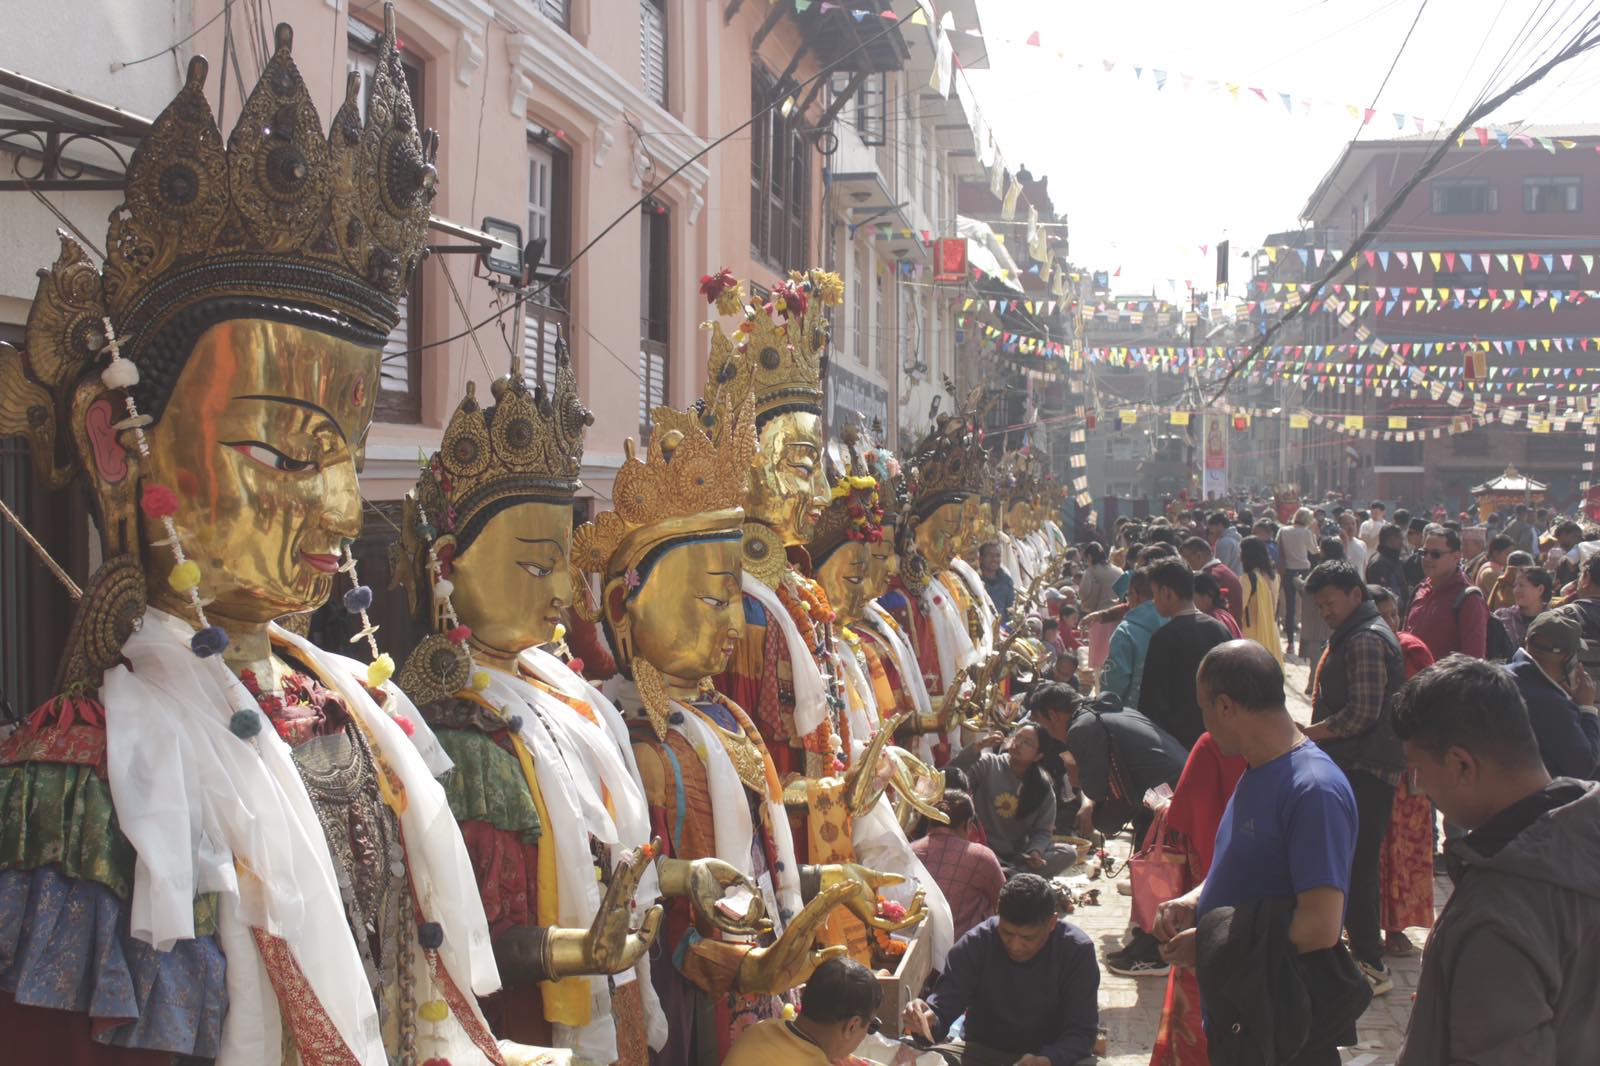 In Pictures: Patan celebrates unique Itilhana Samyak Mahadan festival in honor of Dipankara Buddha